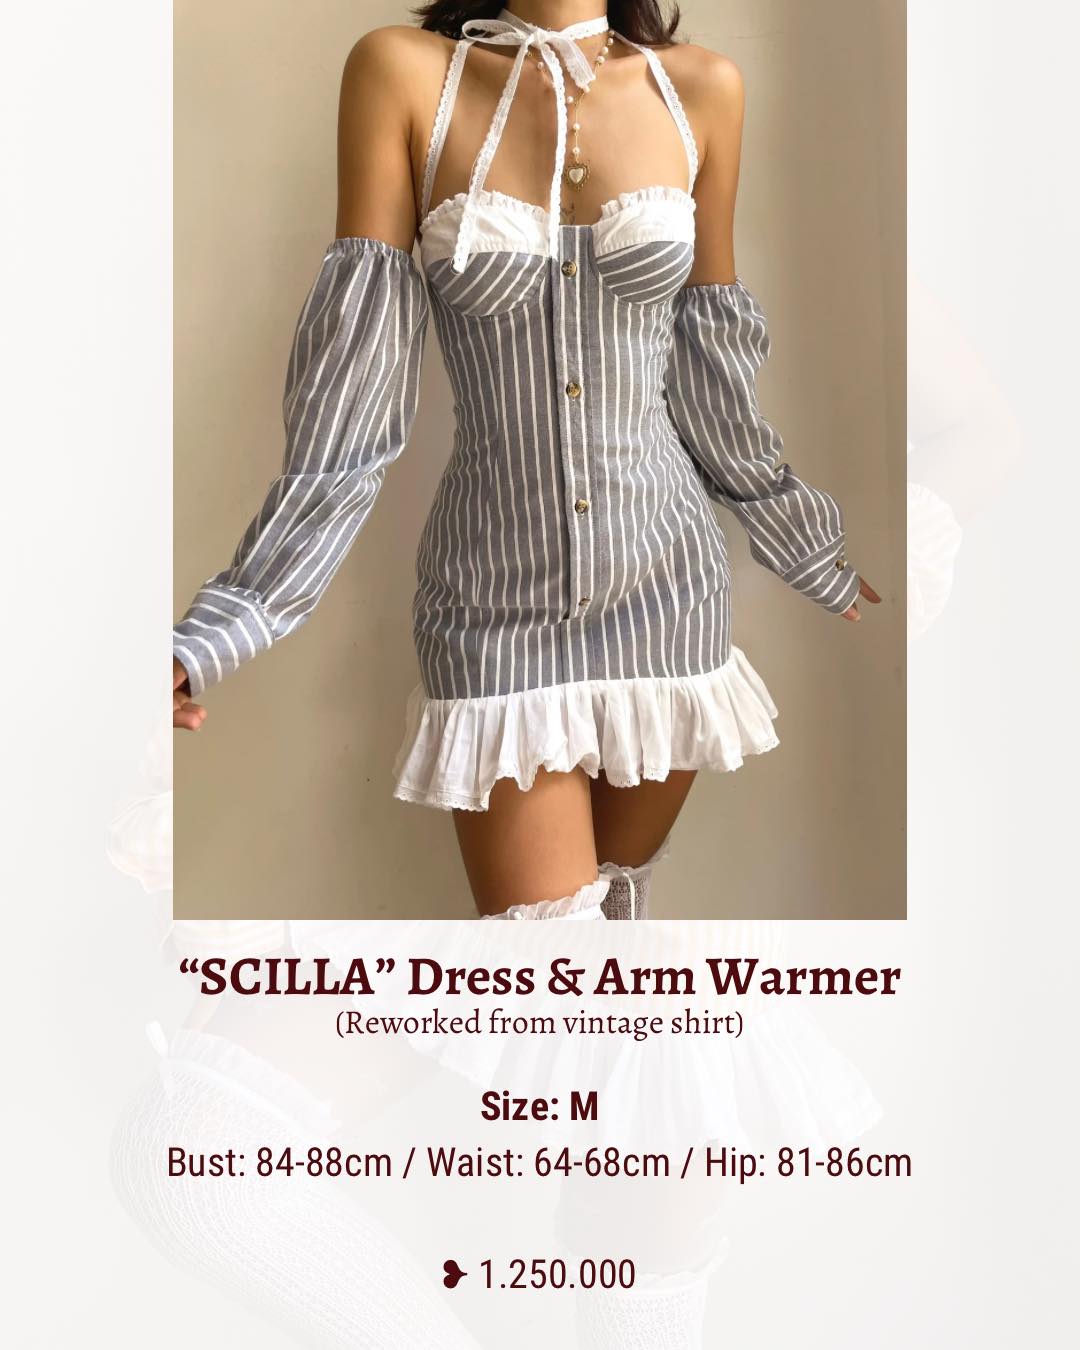 "SCILLA" DRESS & ARM WARMER